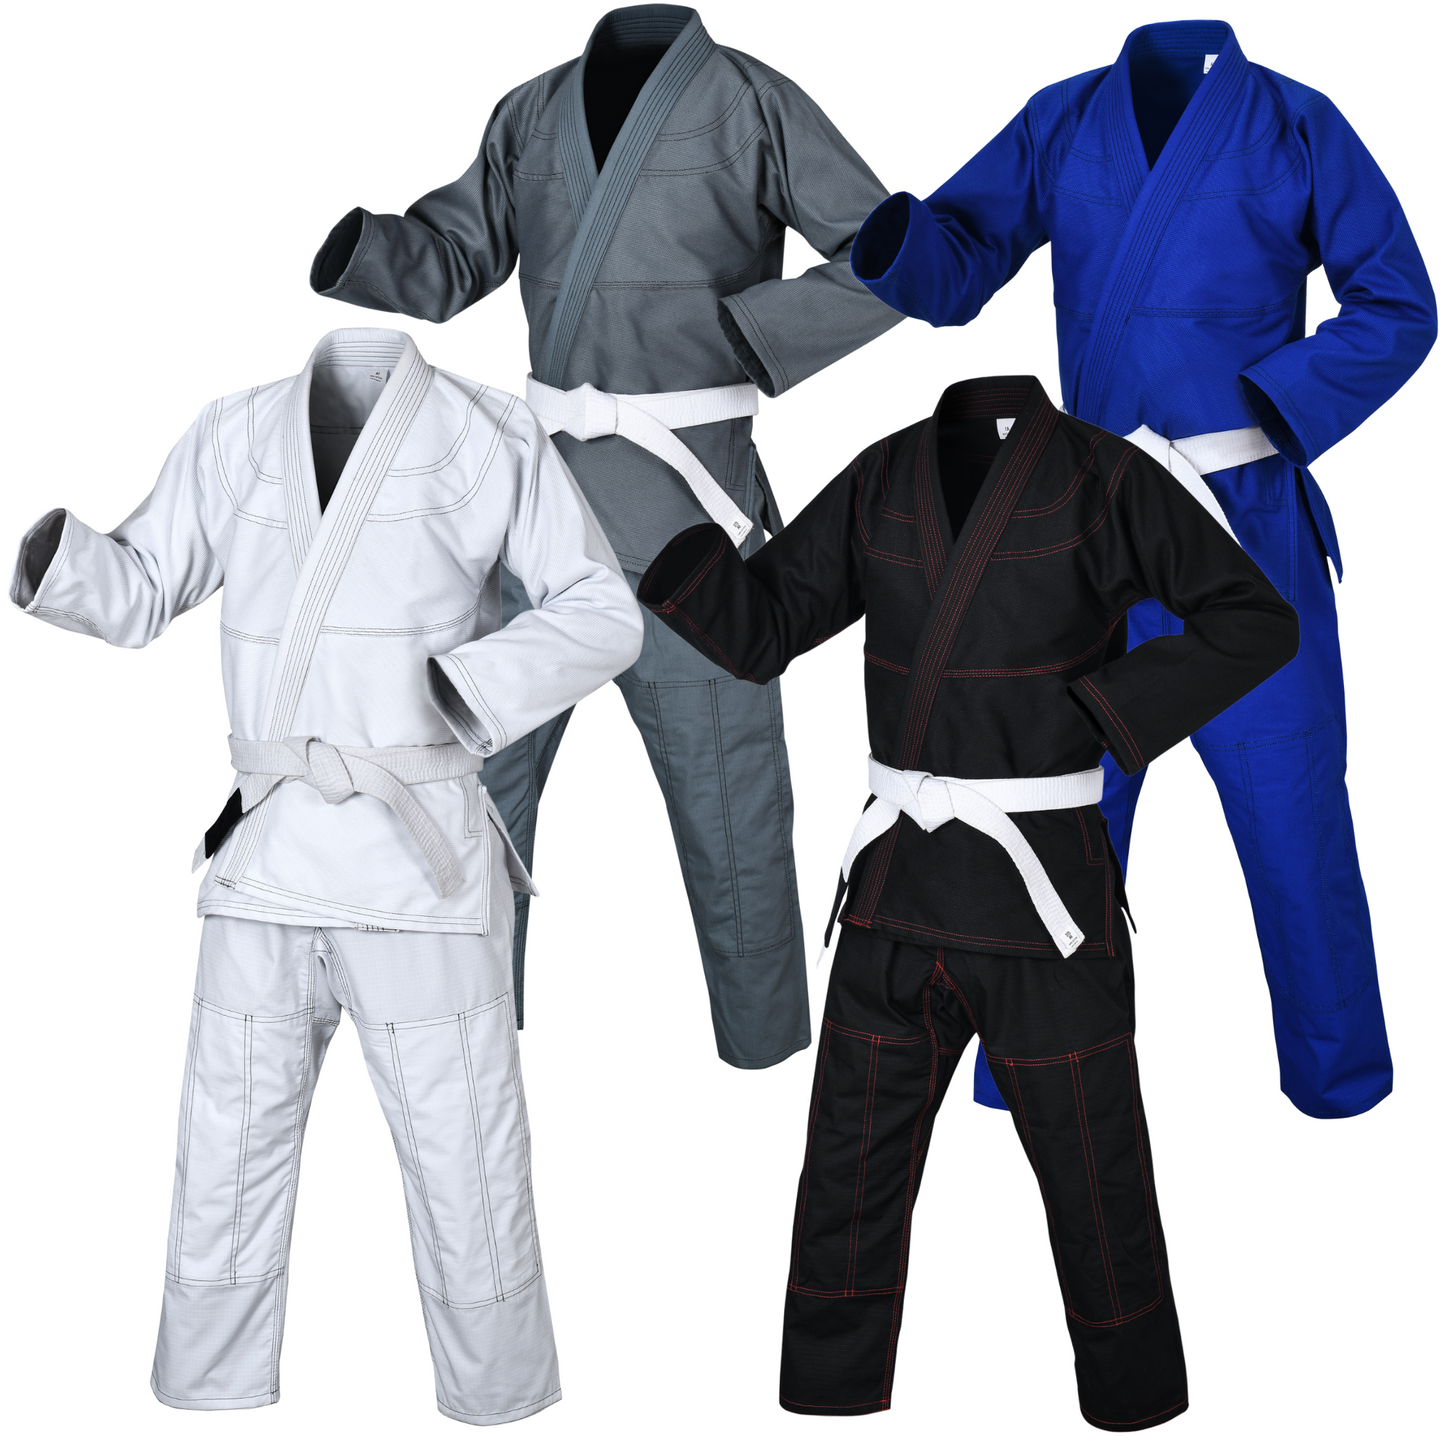 Brazilian Jiu Jitsu Gi for Men and Women, Lightweight and Preshrunk With a Free White Belt for Grappling Uniform Kimonos